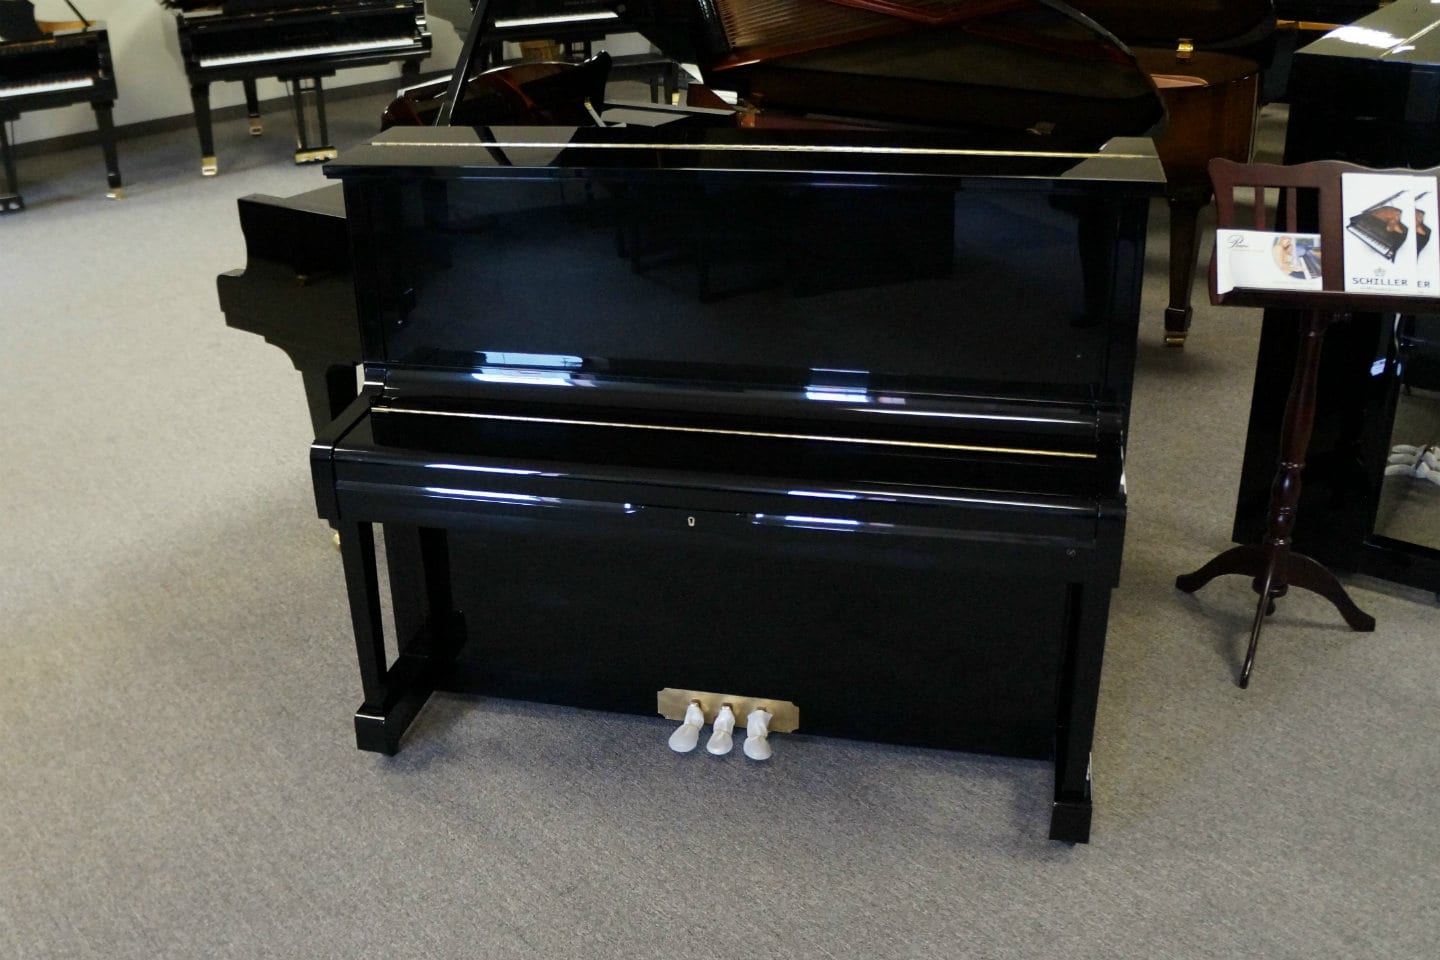 Kawai BS-20 Upright Piano